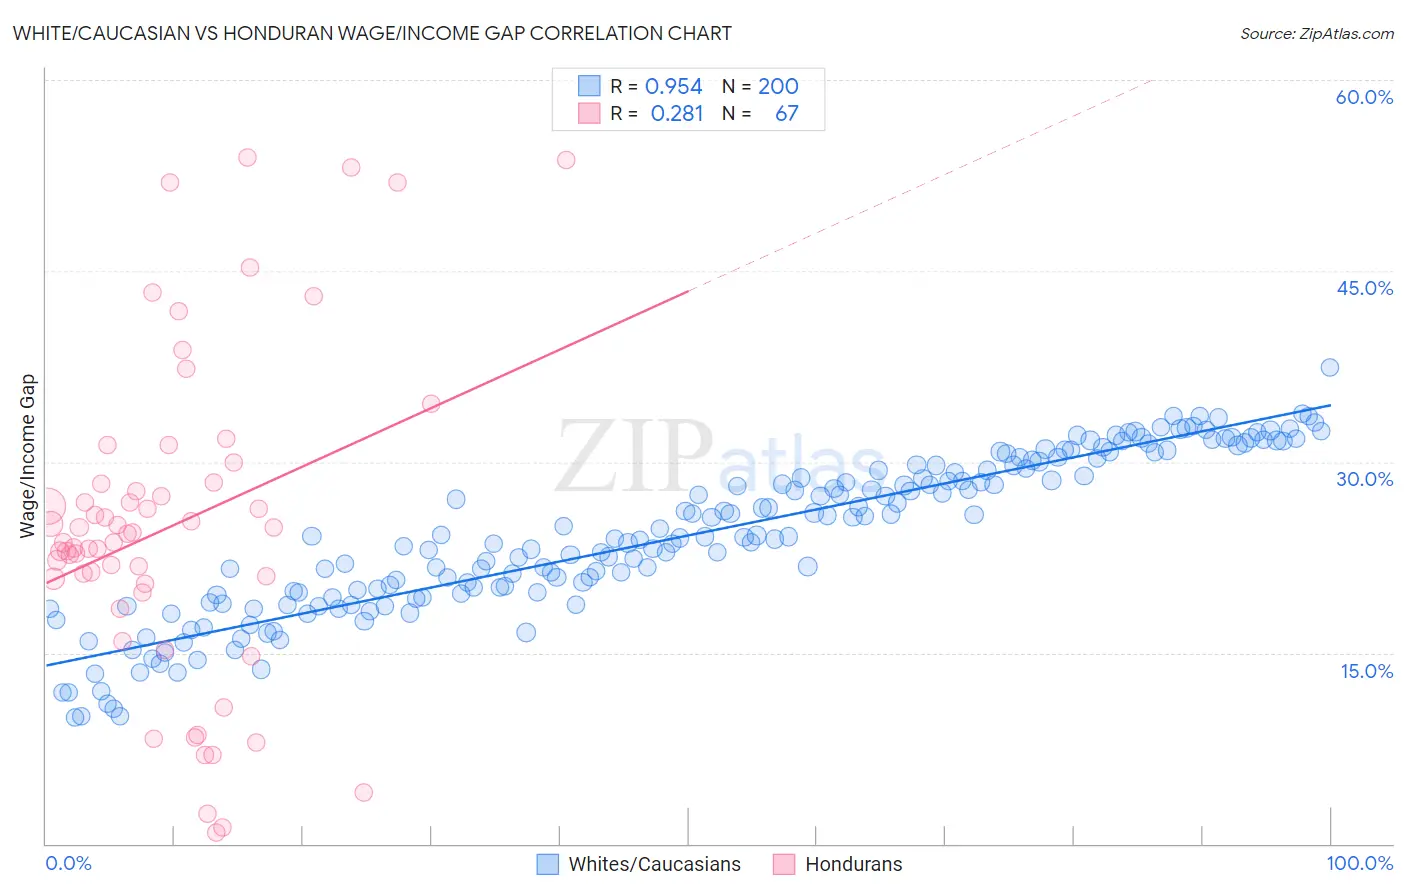 White/Caucasian vs Honduran Wage/Income Gap